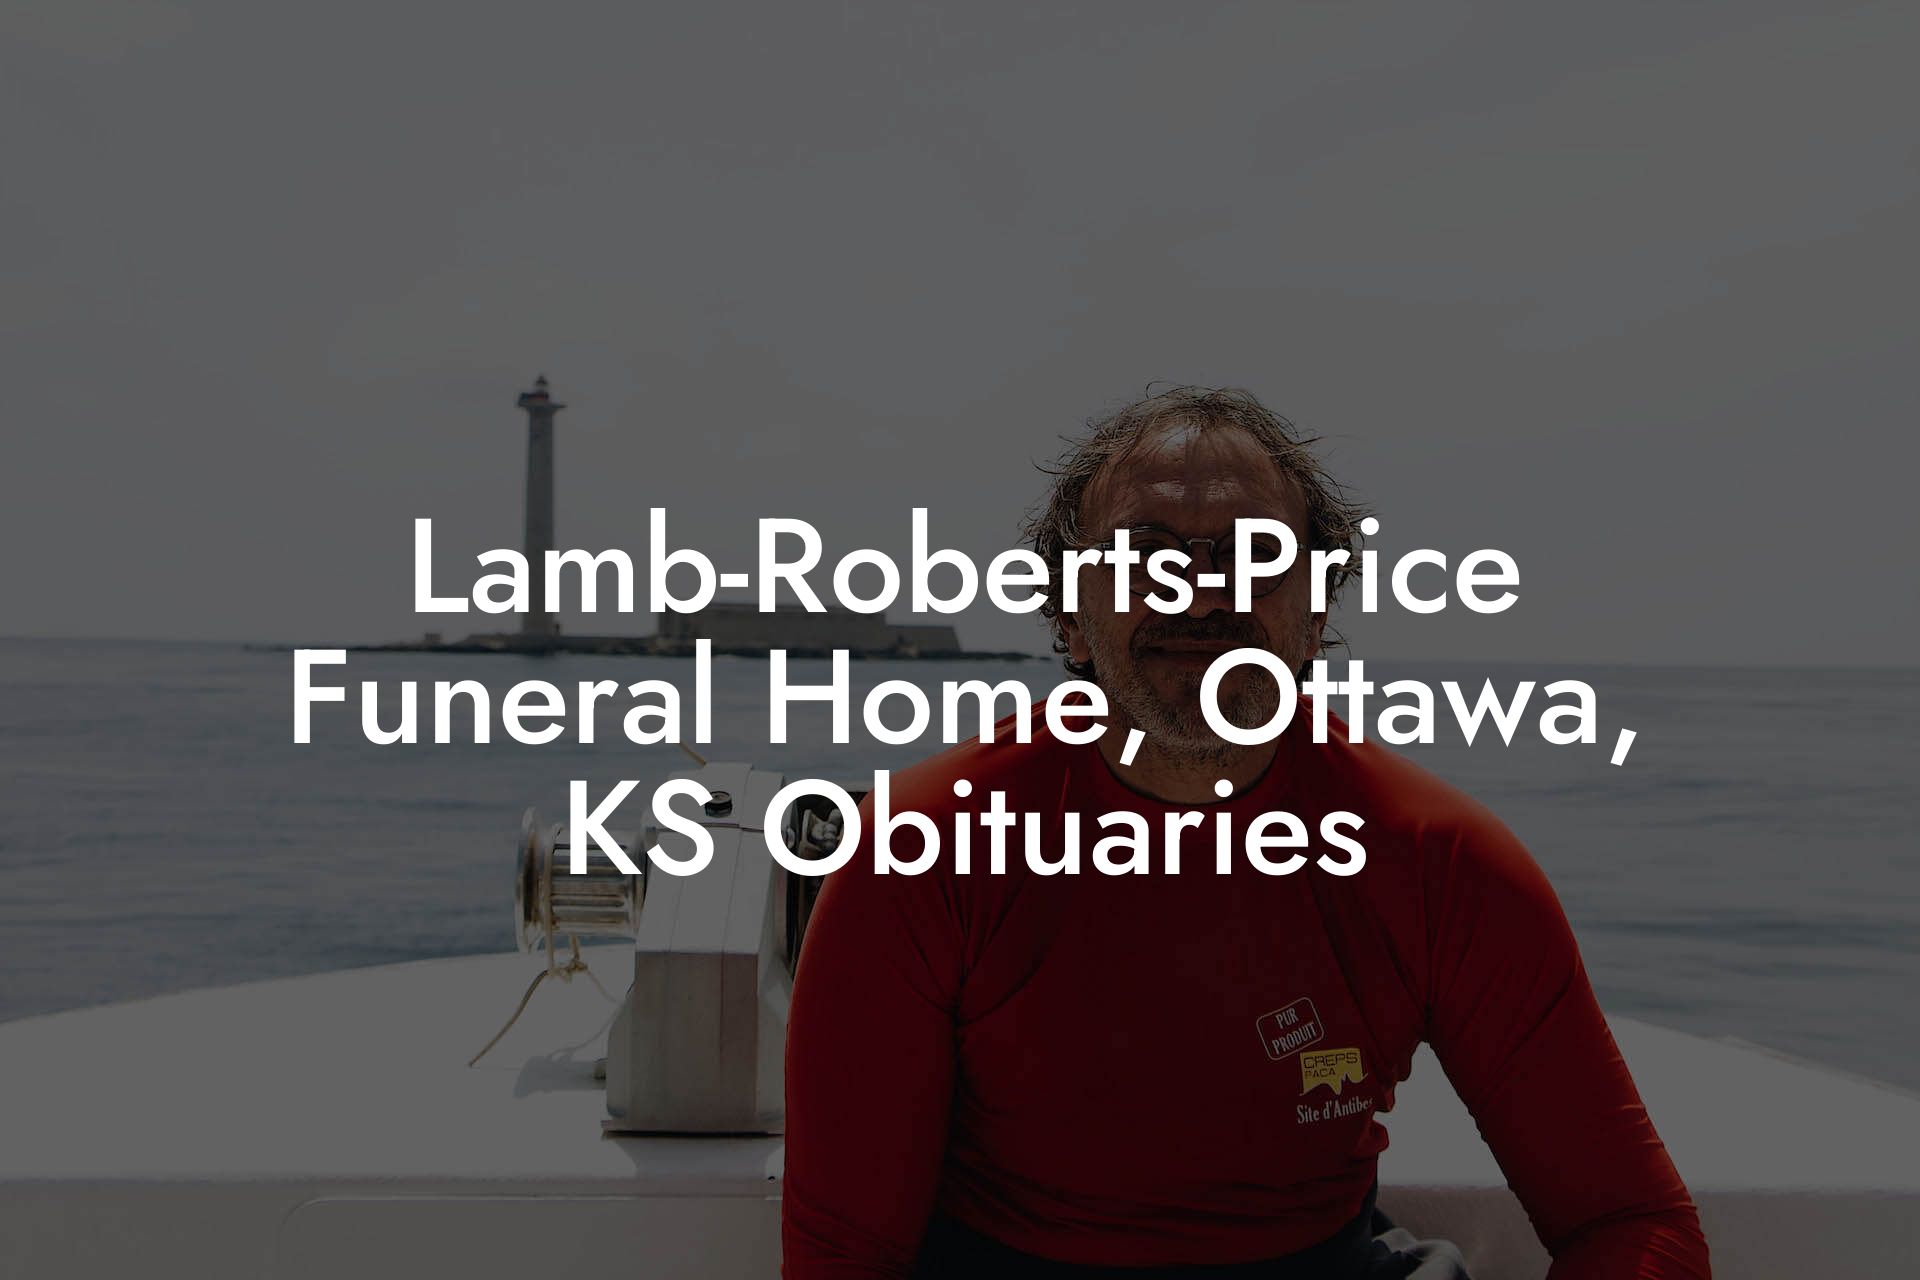 Lamb-Roberts-Price Funeral Home, Ottawa, KS Obituaries